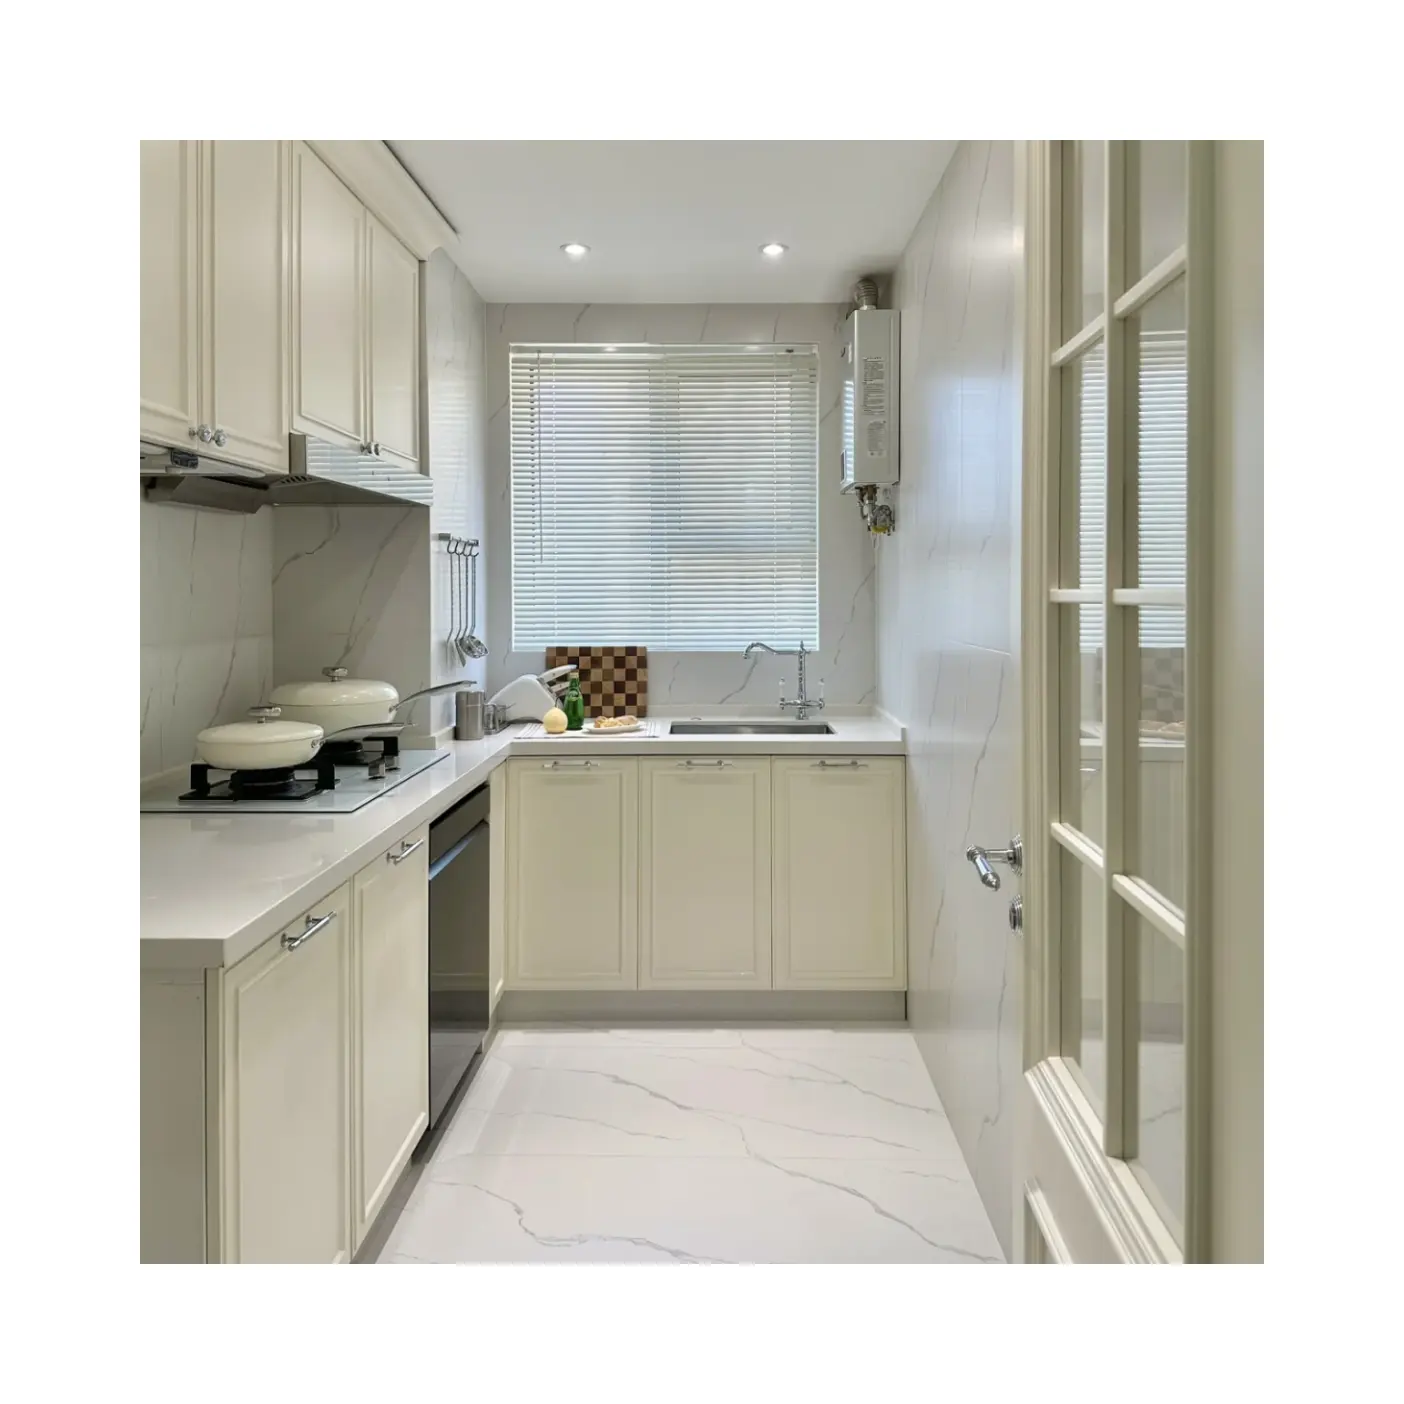 Desain modern lemari dapur perabotan dapur furnitur dapur modern